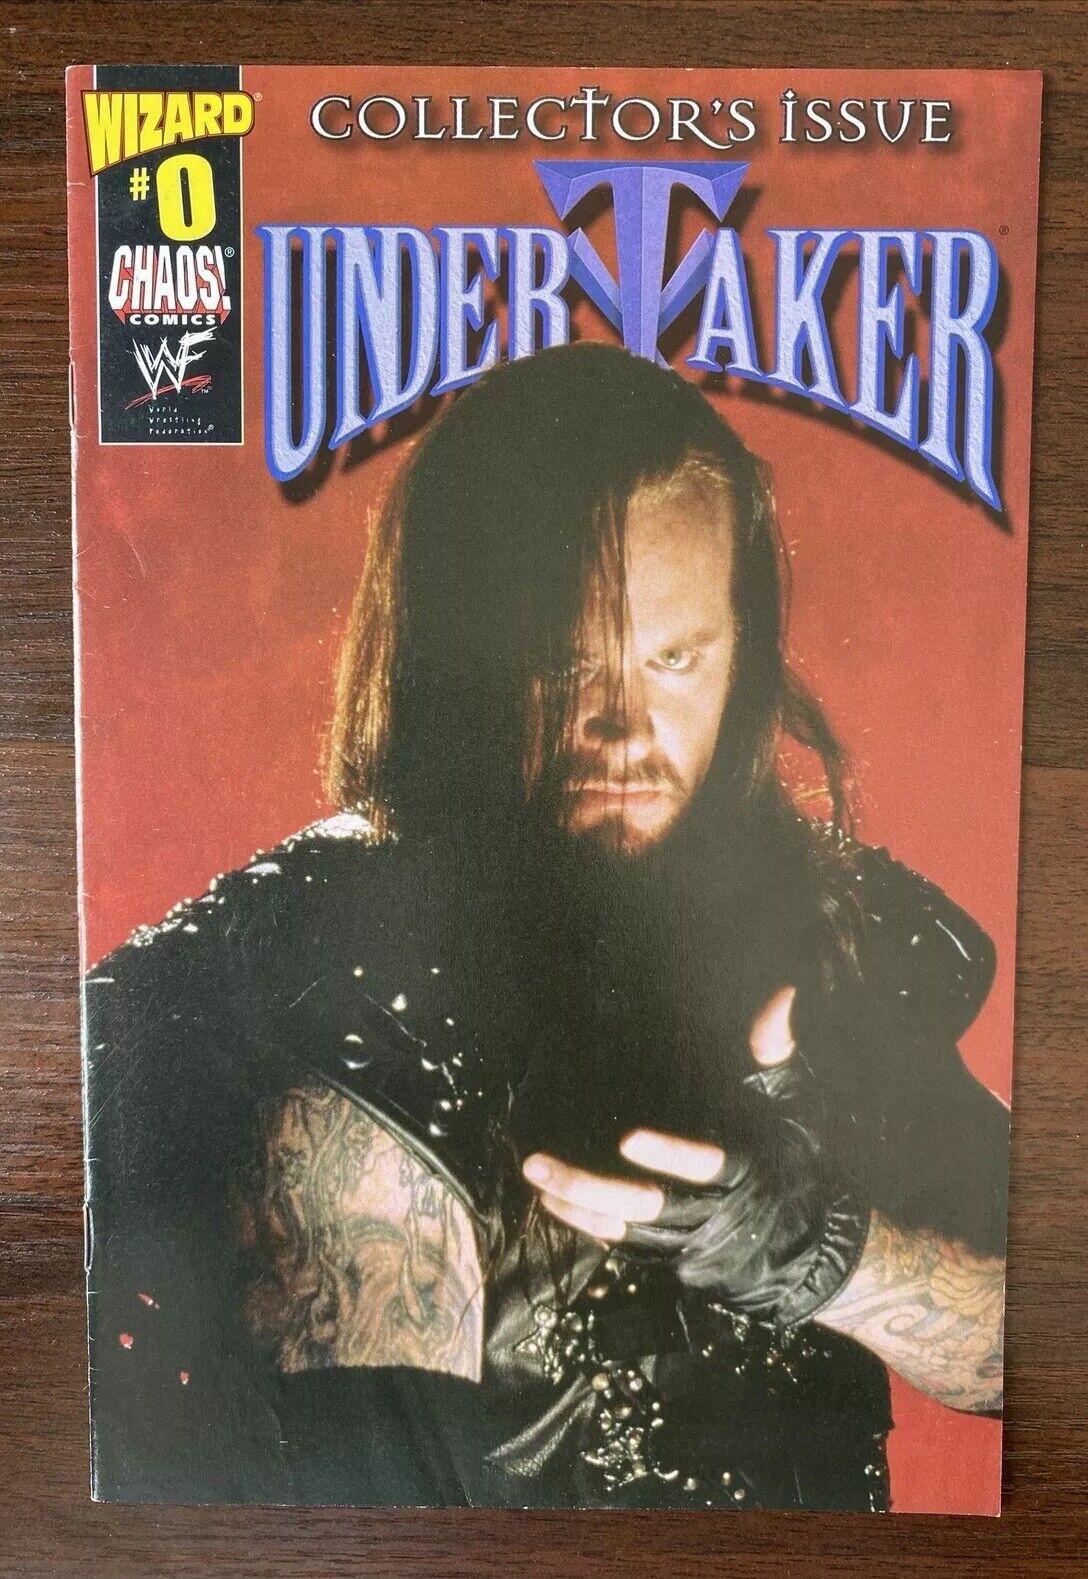 Undertaker #0 Chaos Comics Wizard 1999 FN/VF